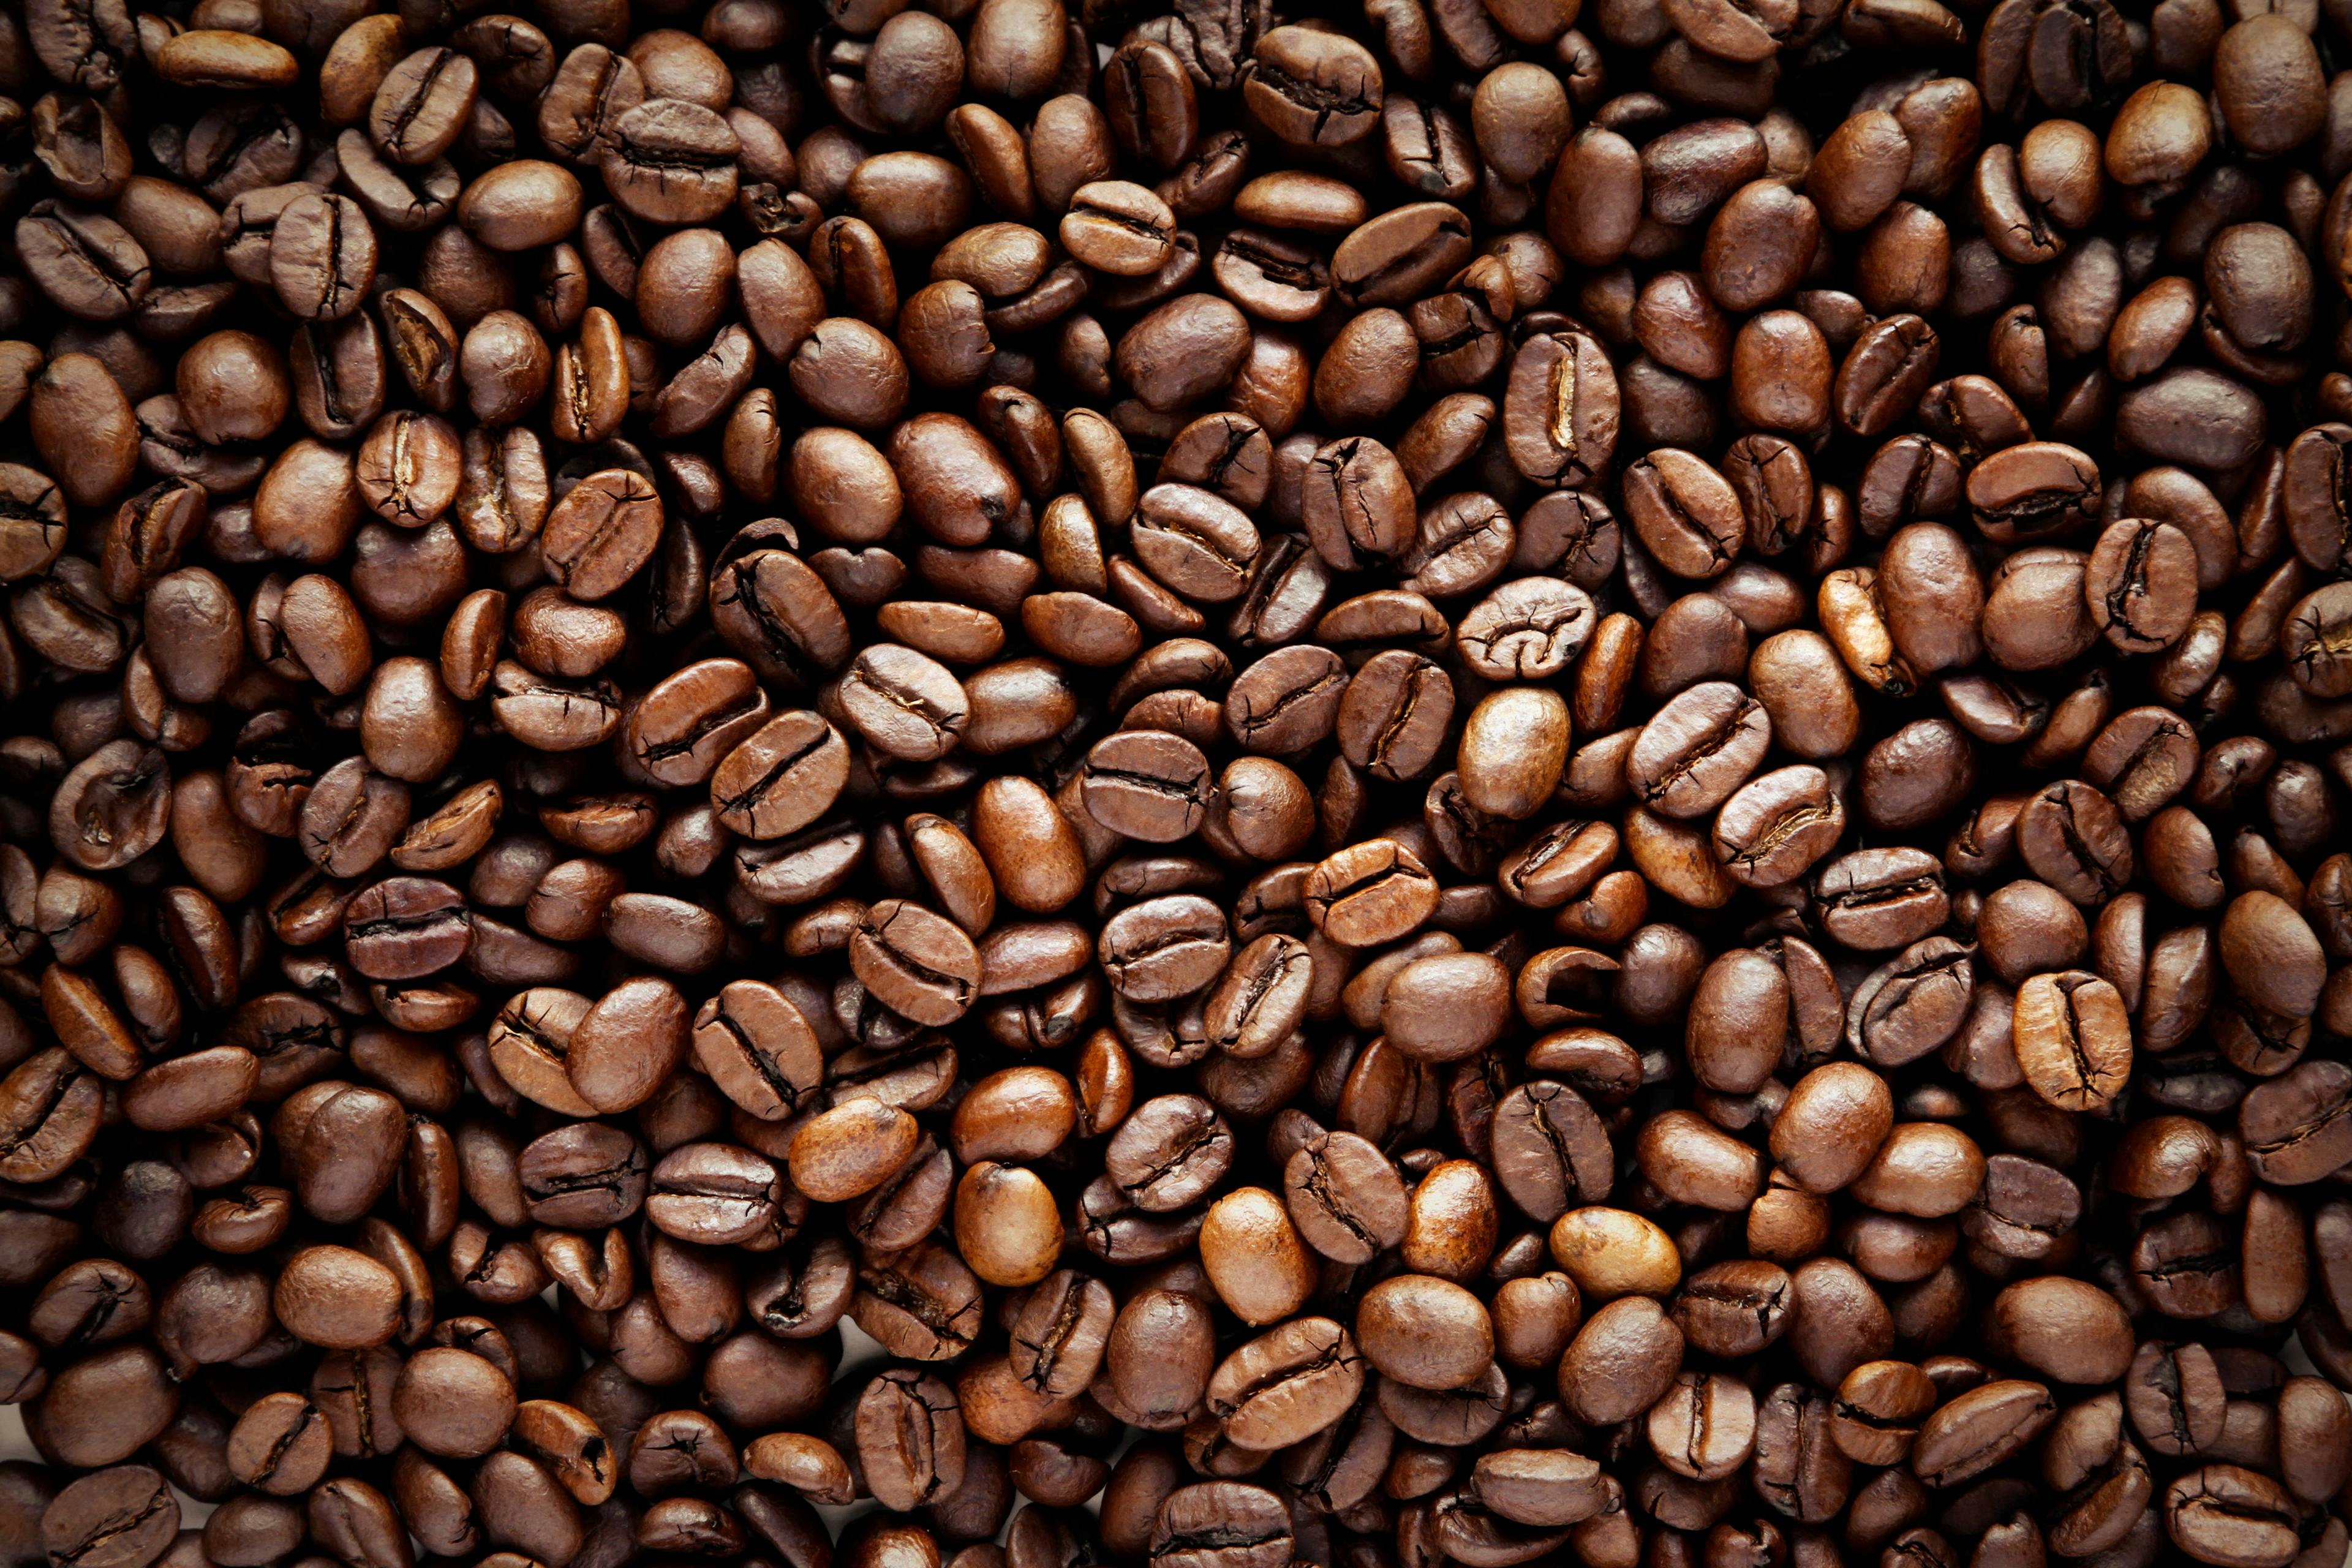 Close close-up of roasted coffee beans | Image Credit: © Stillfx - stock.adobe.com